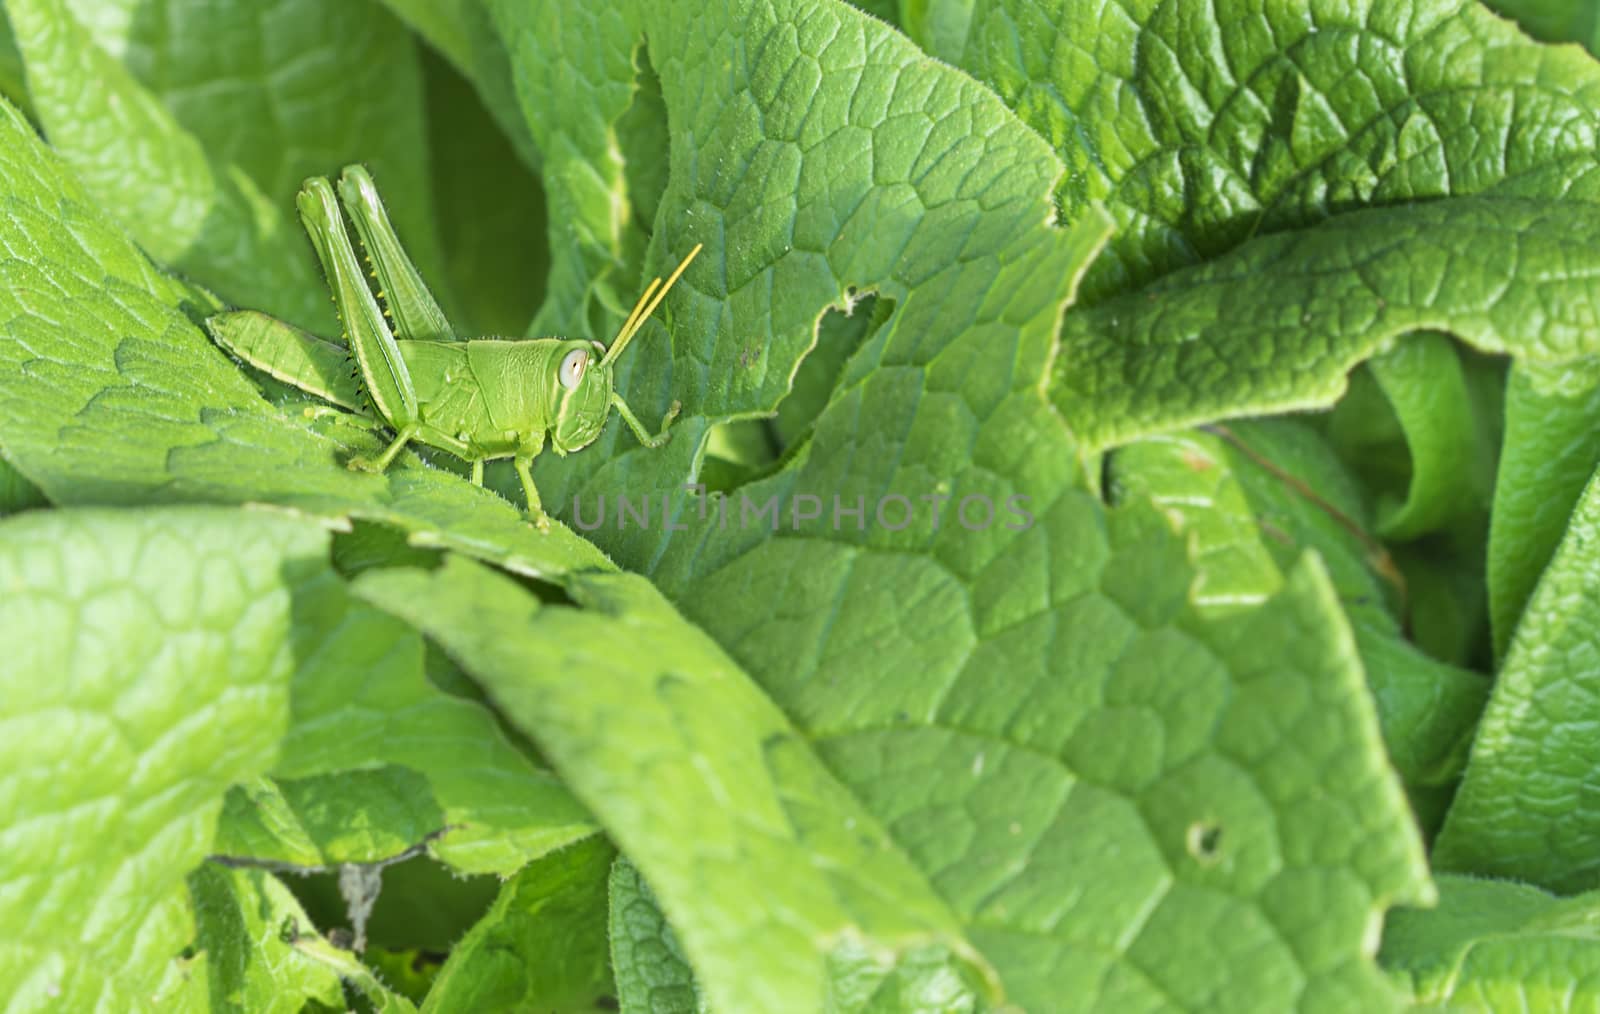 Green Grasshopper on Comphrey Leaves by sherj